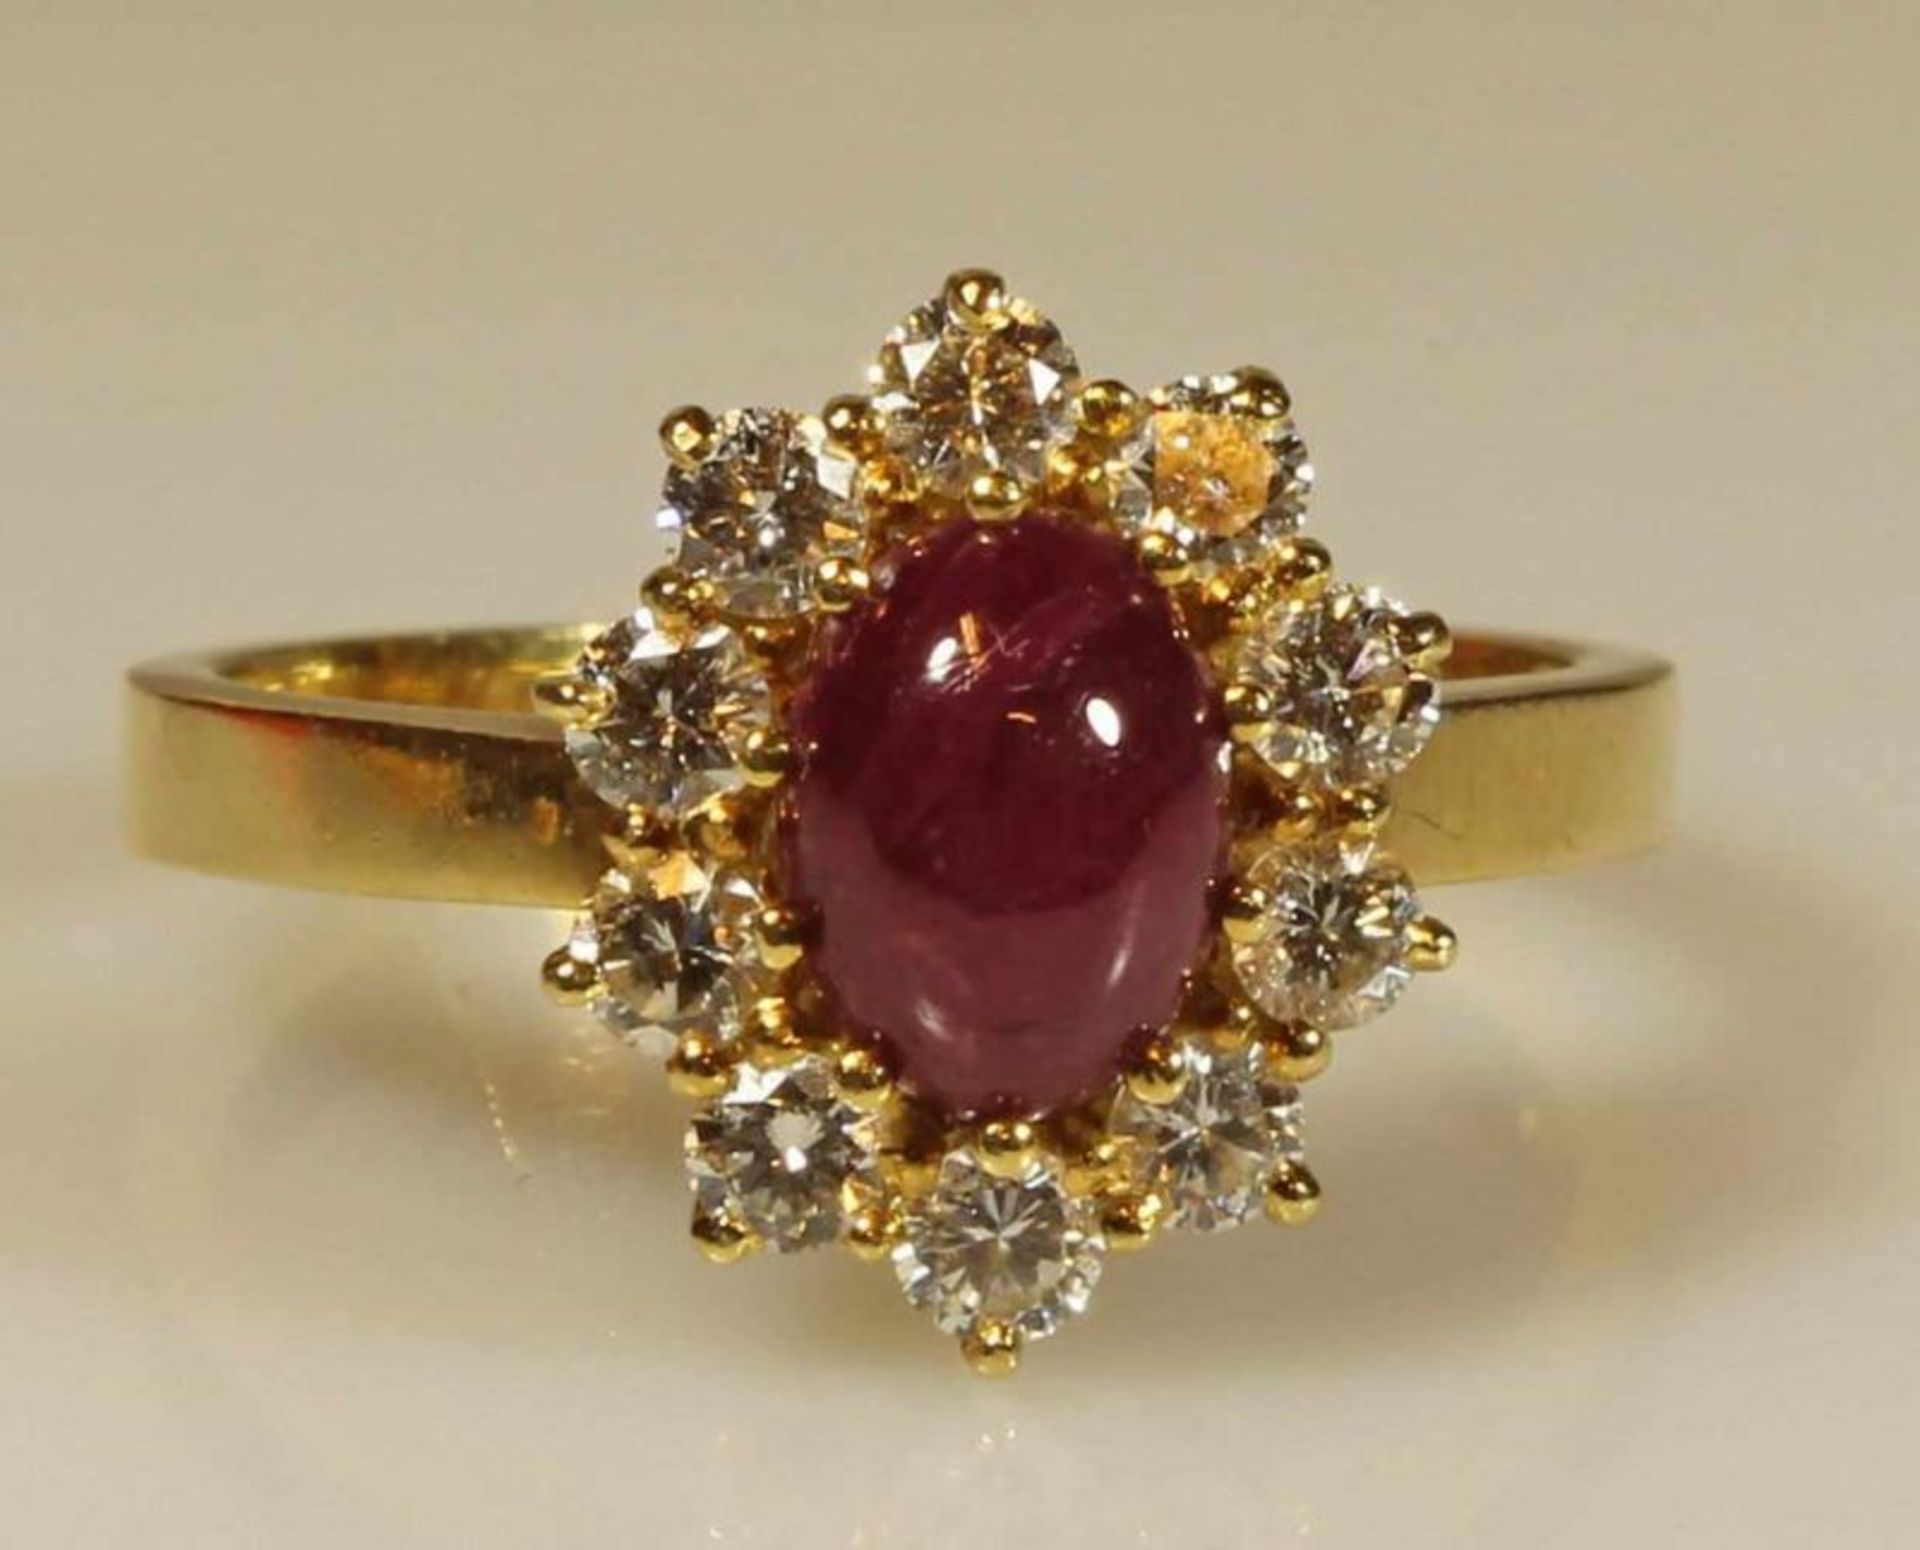 Ring, GG 750, 1 Rubin-Cabochon, 10 Diamanten zus. ca. 0.50 ct., 5 g, RM 18 20.00 % buyer's premium